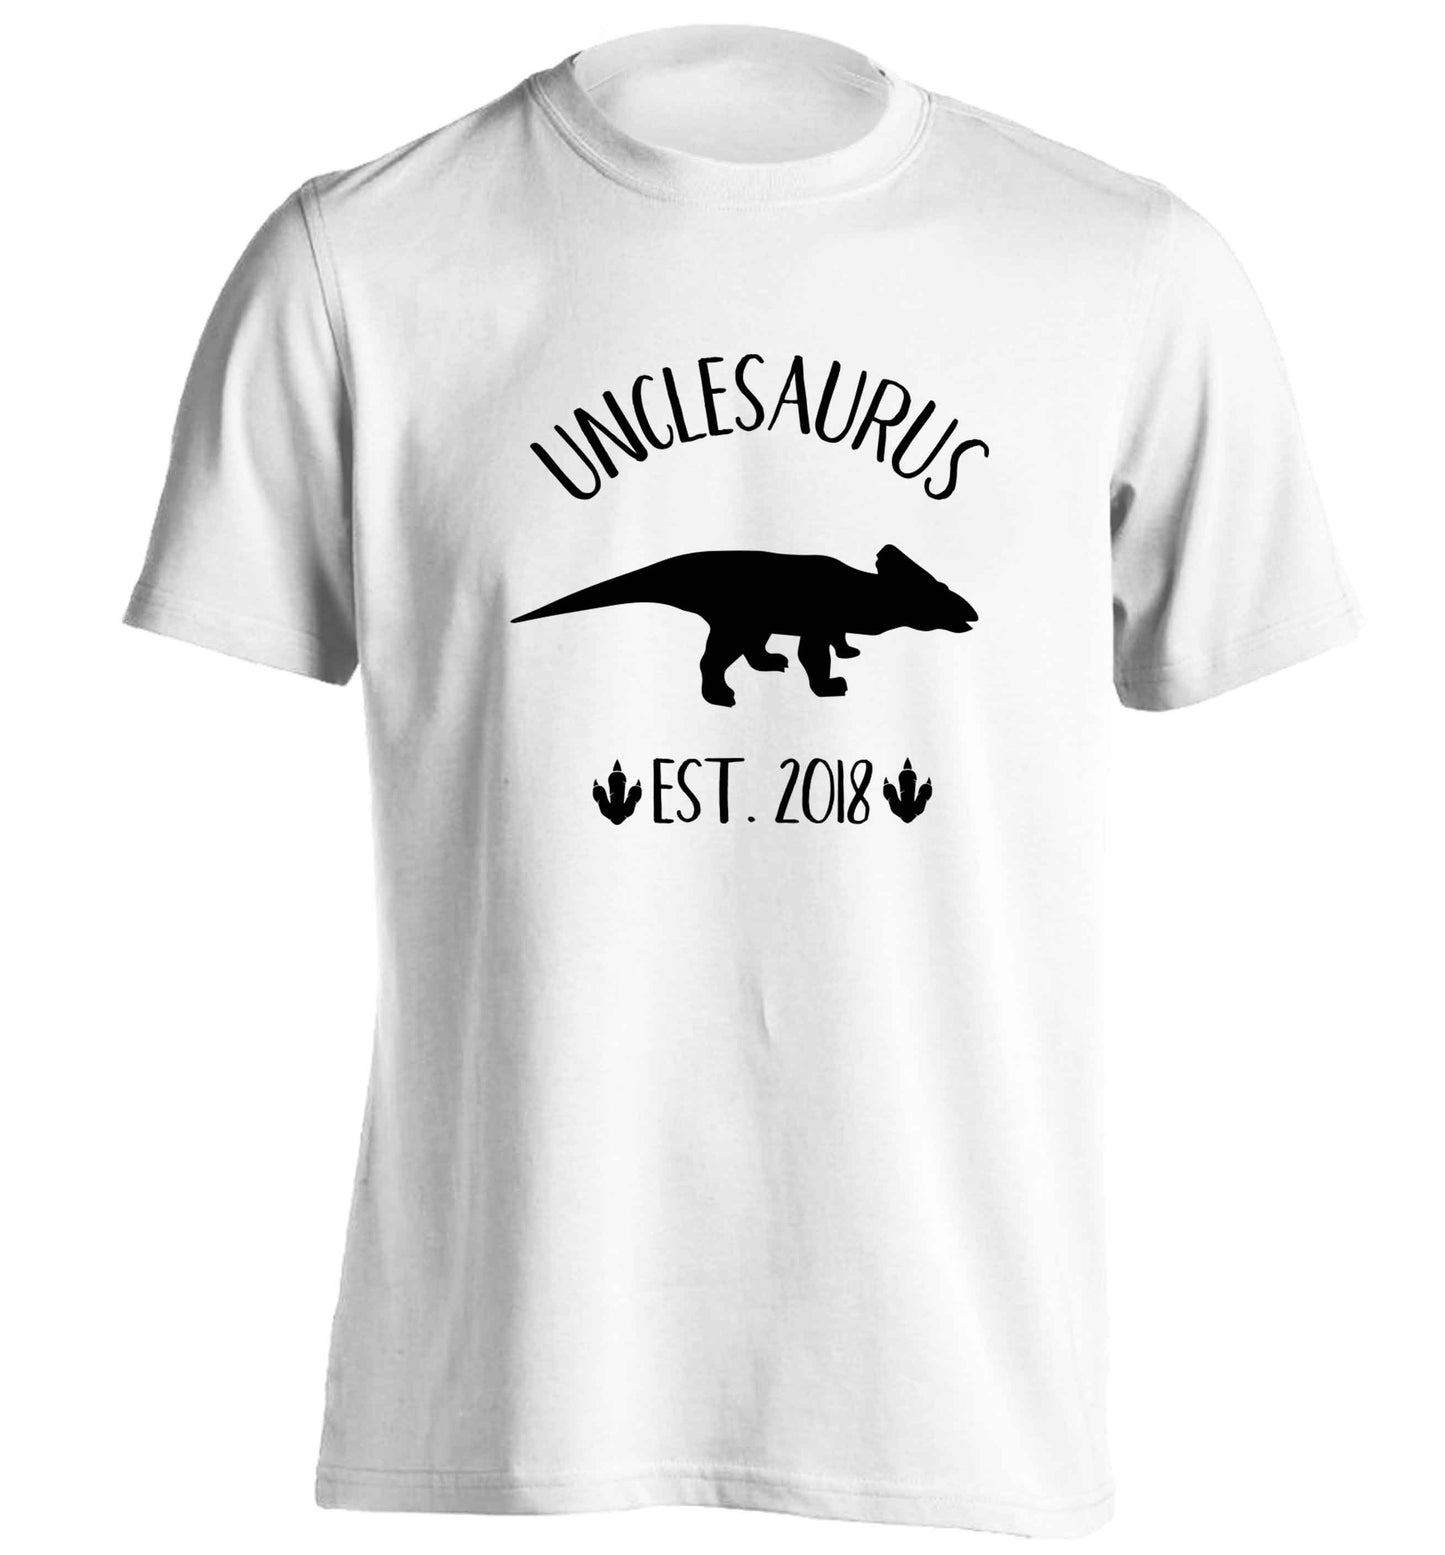 Personalised unclesaurus since (custom date) adults unisex white Tshirt 2XL